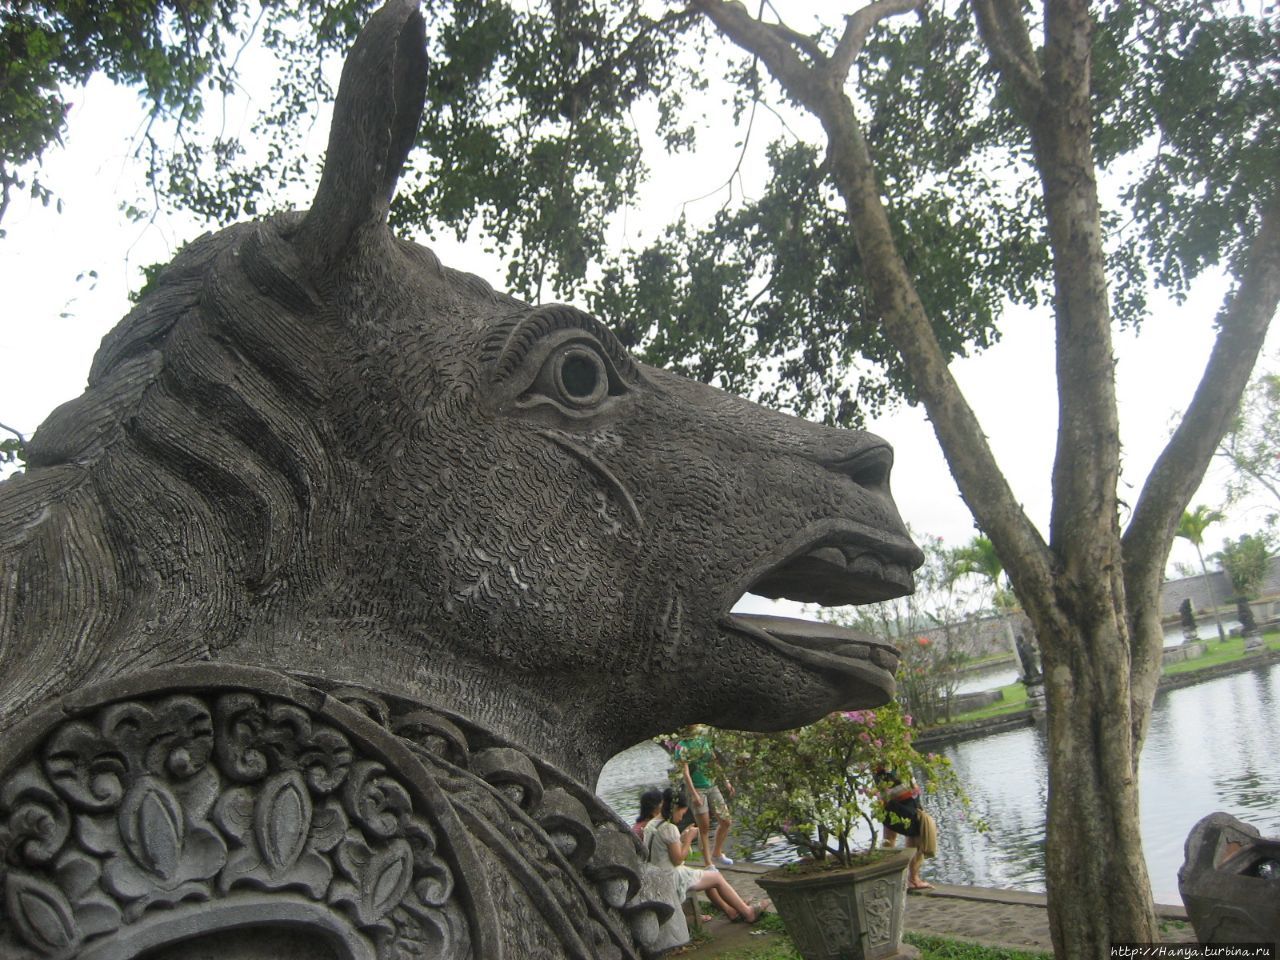 Водный дворец Тиртаганга Тиртаганга, Индонезия